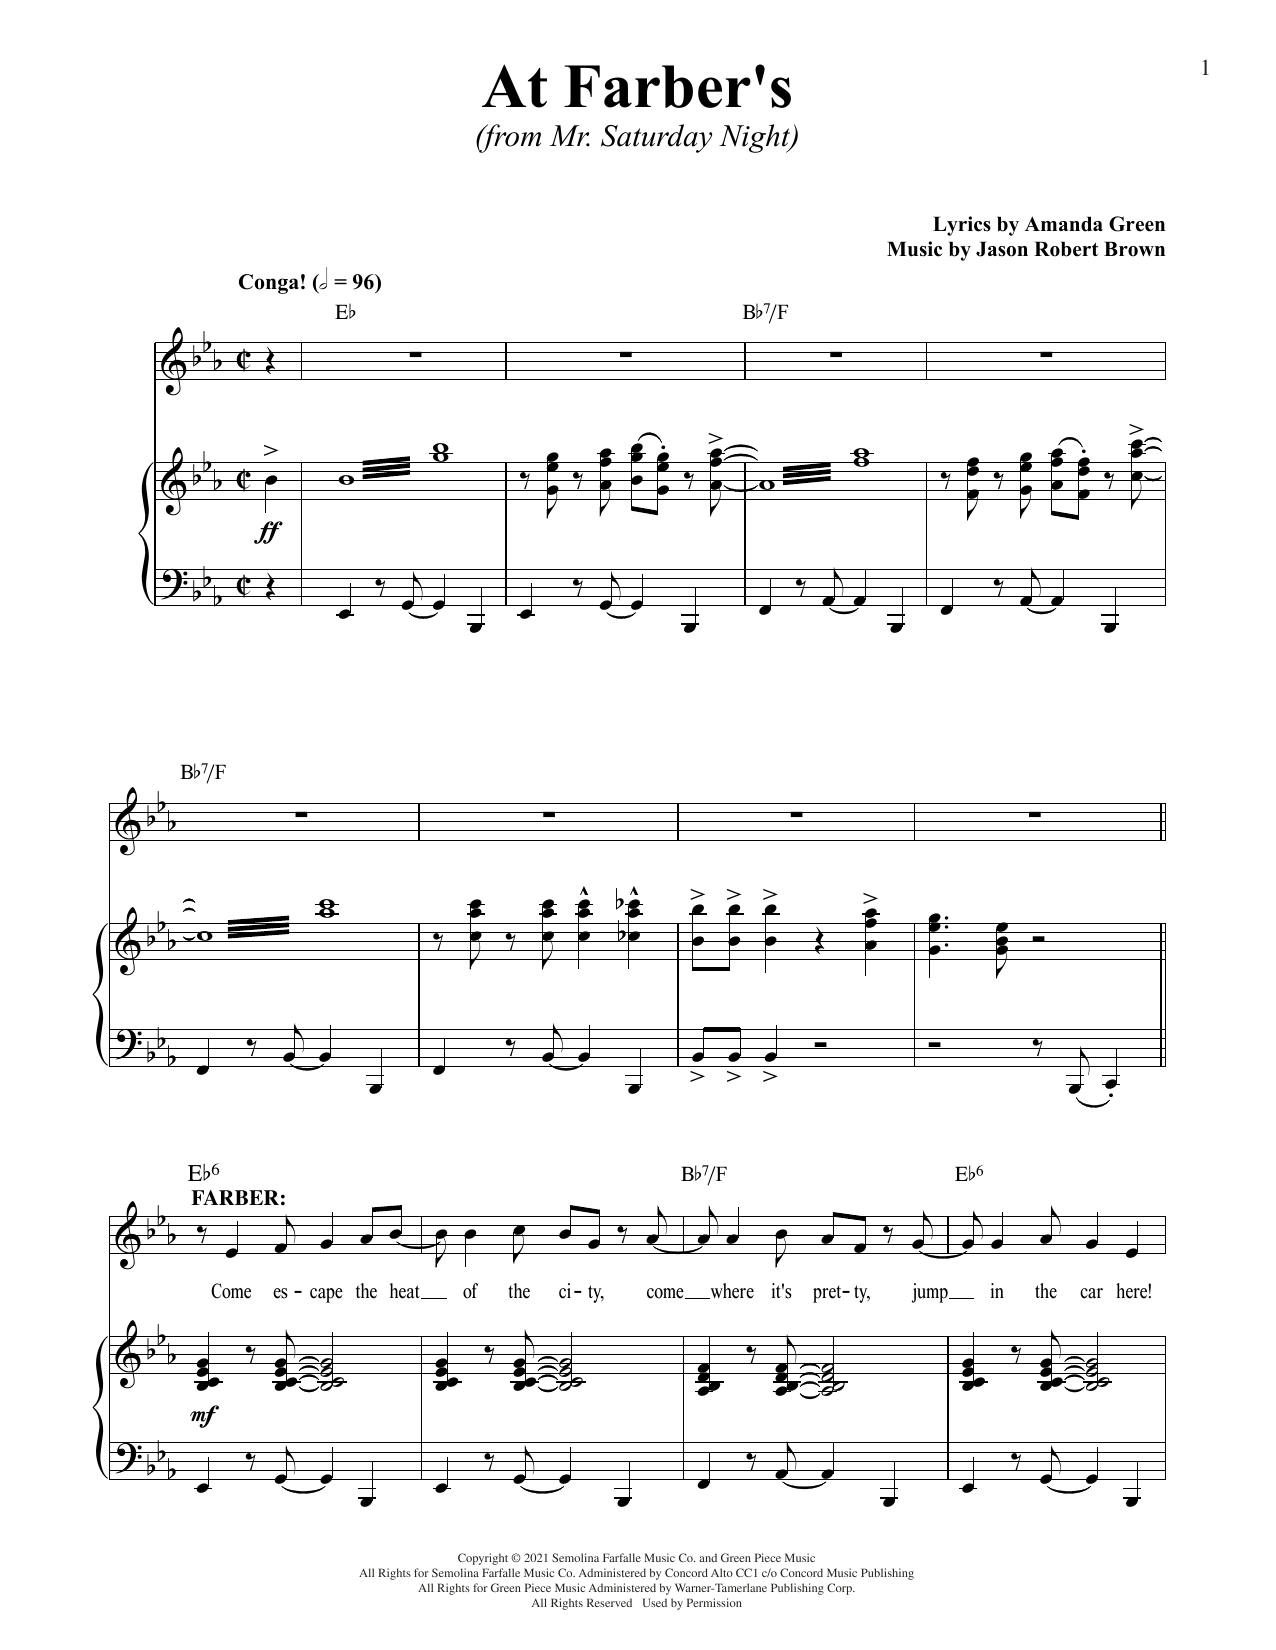 Jason Robert Brown and Amanda Green At Farber's (from Mr. Saturday Night) Sheet Music Notes & Chords for Piano & Vocal - Download or Print PDF